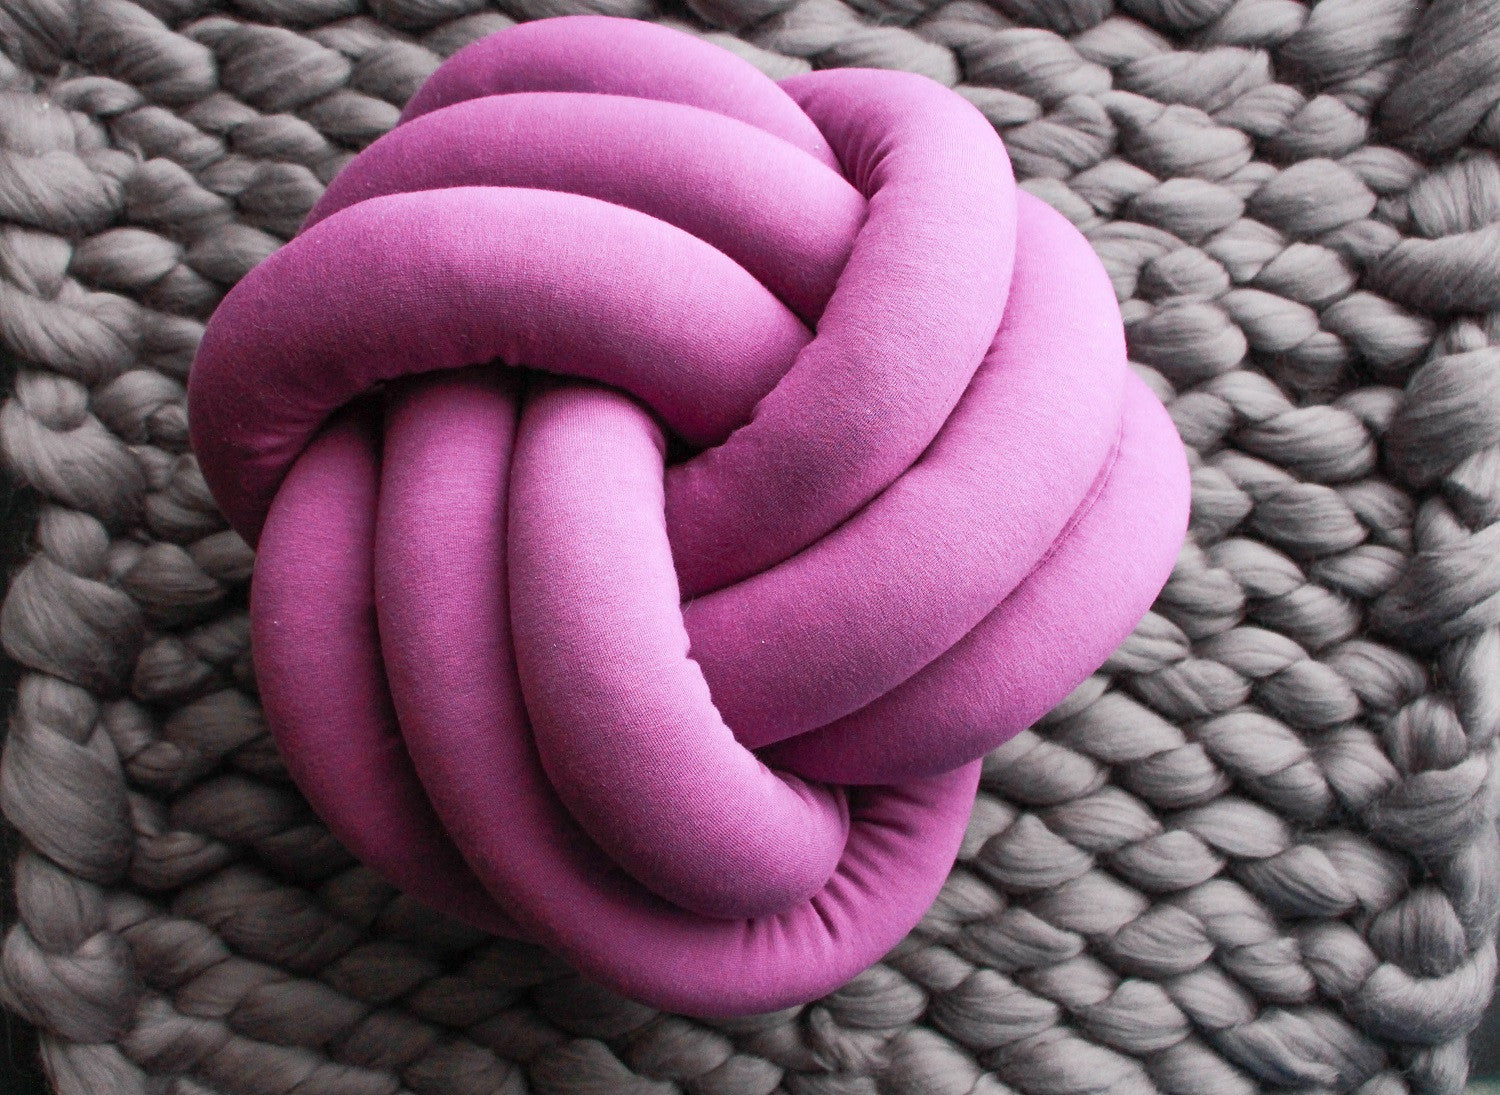 Swirl Knot Pillow - See more Knot Pillows & Cushions at JujuAndJake.com